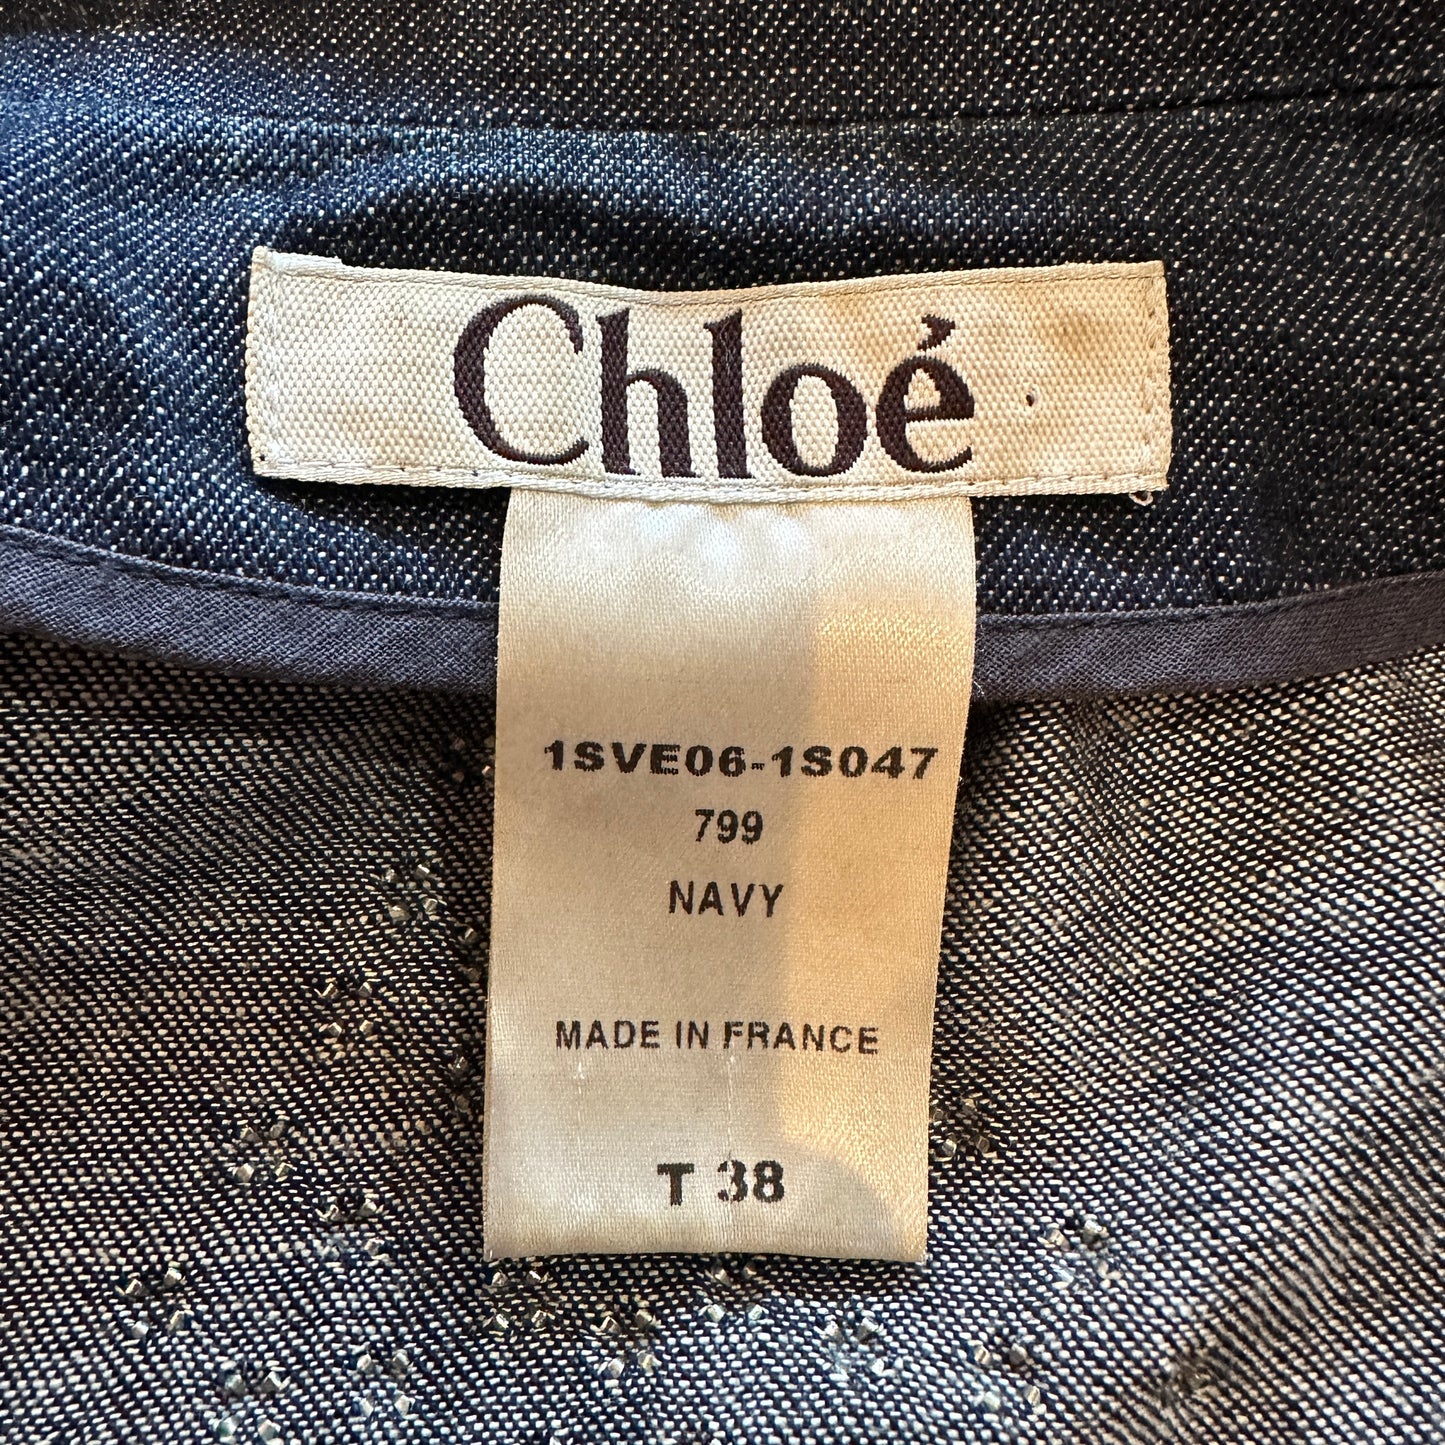 Chloé S/S 2001 Studded Denim Jacket